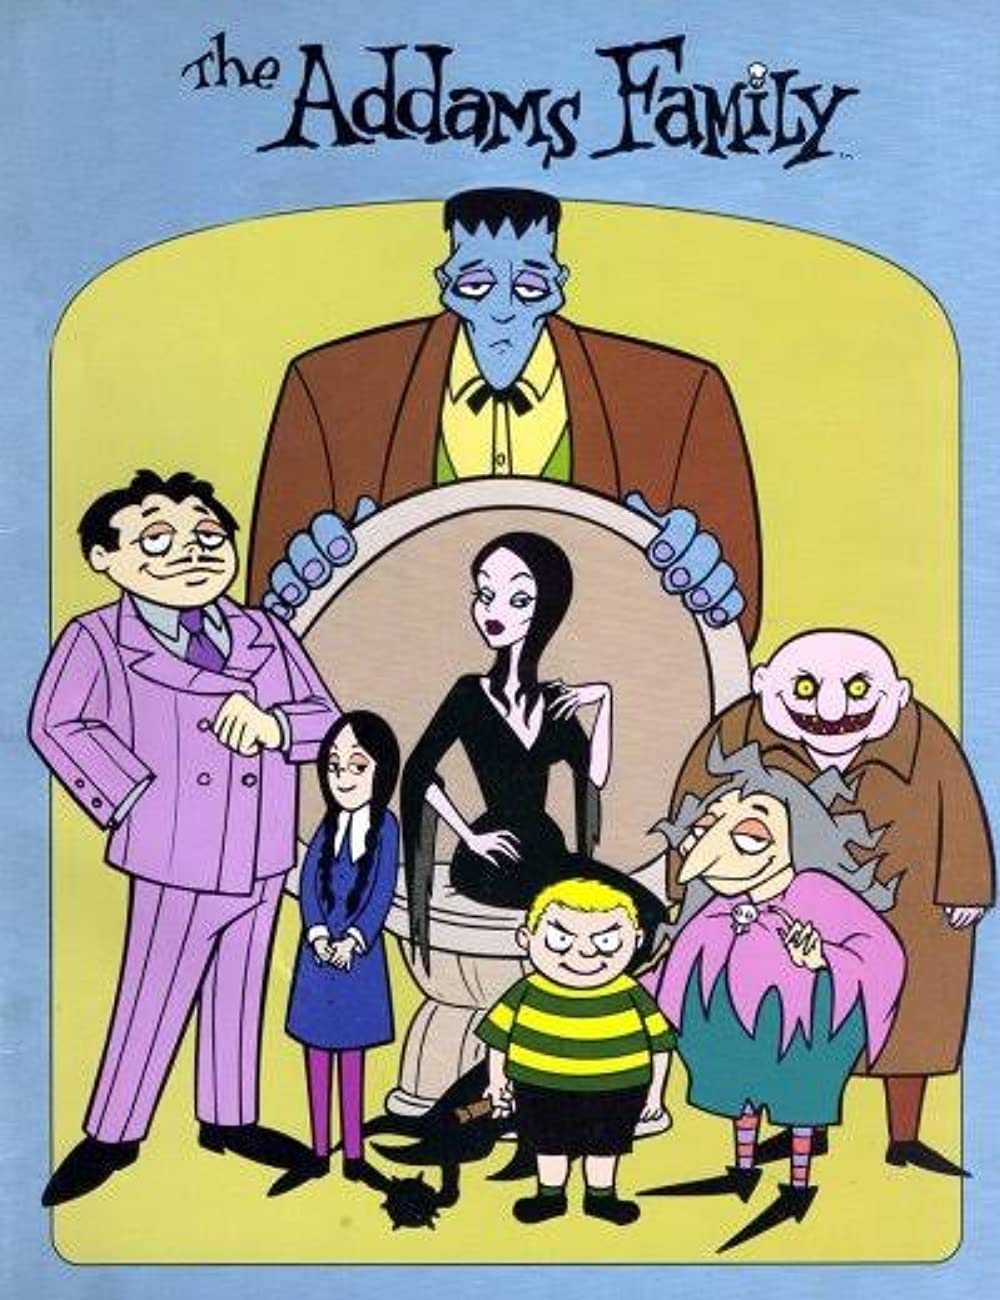 90s cartoon show The Addams Family